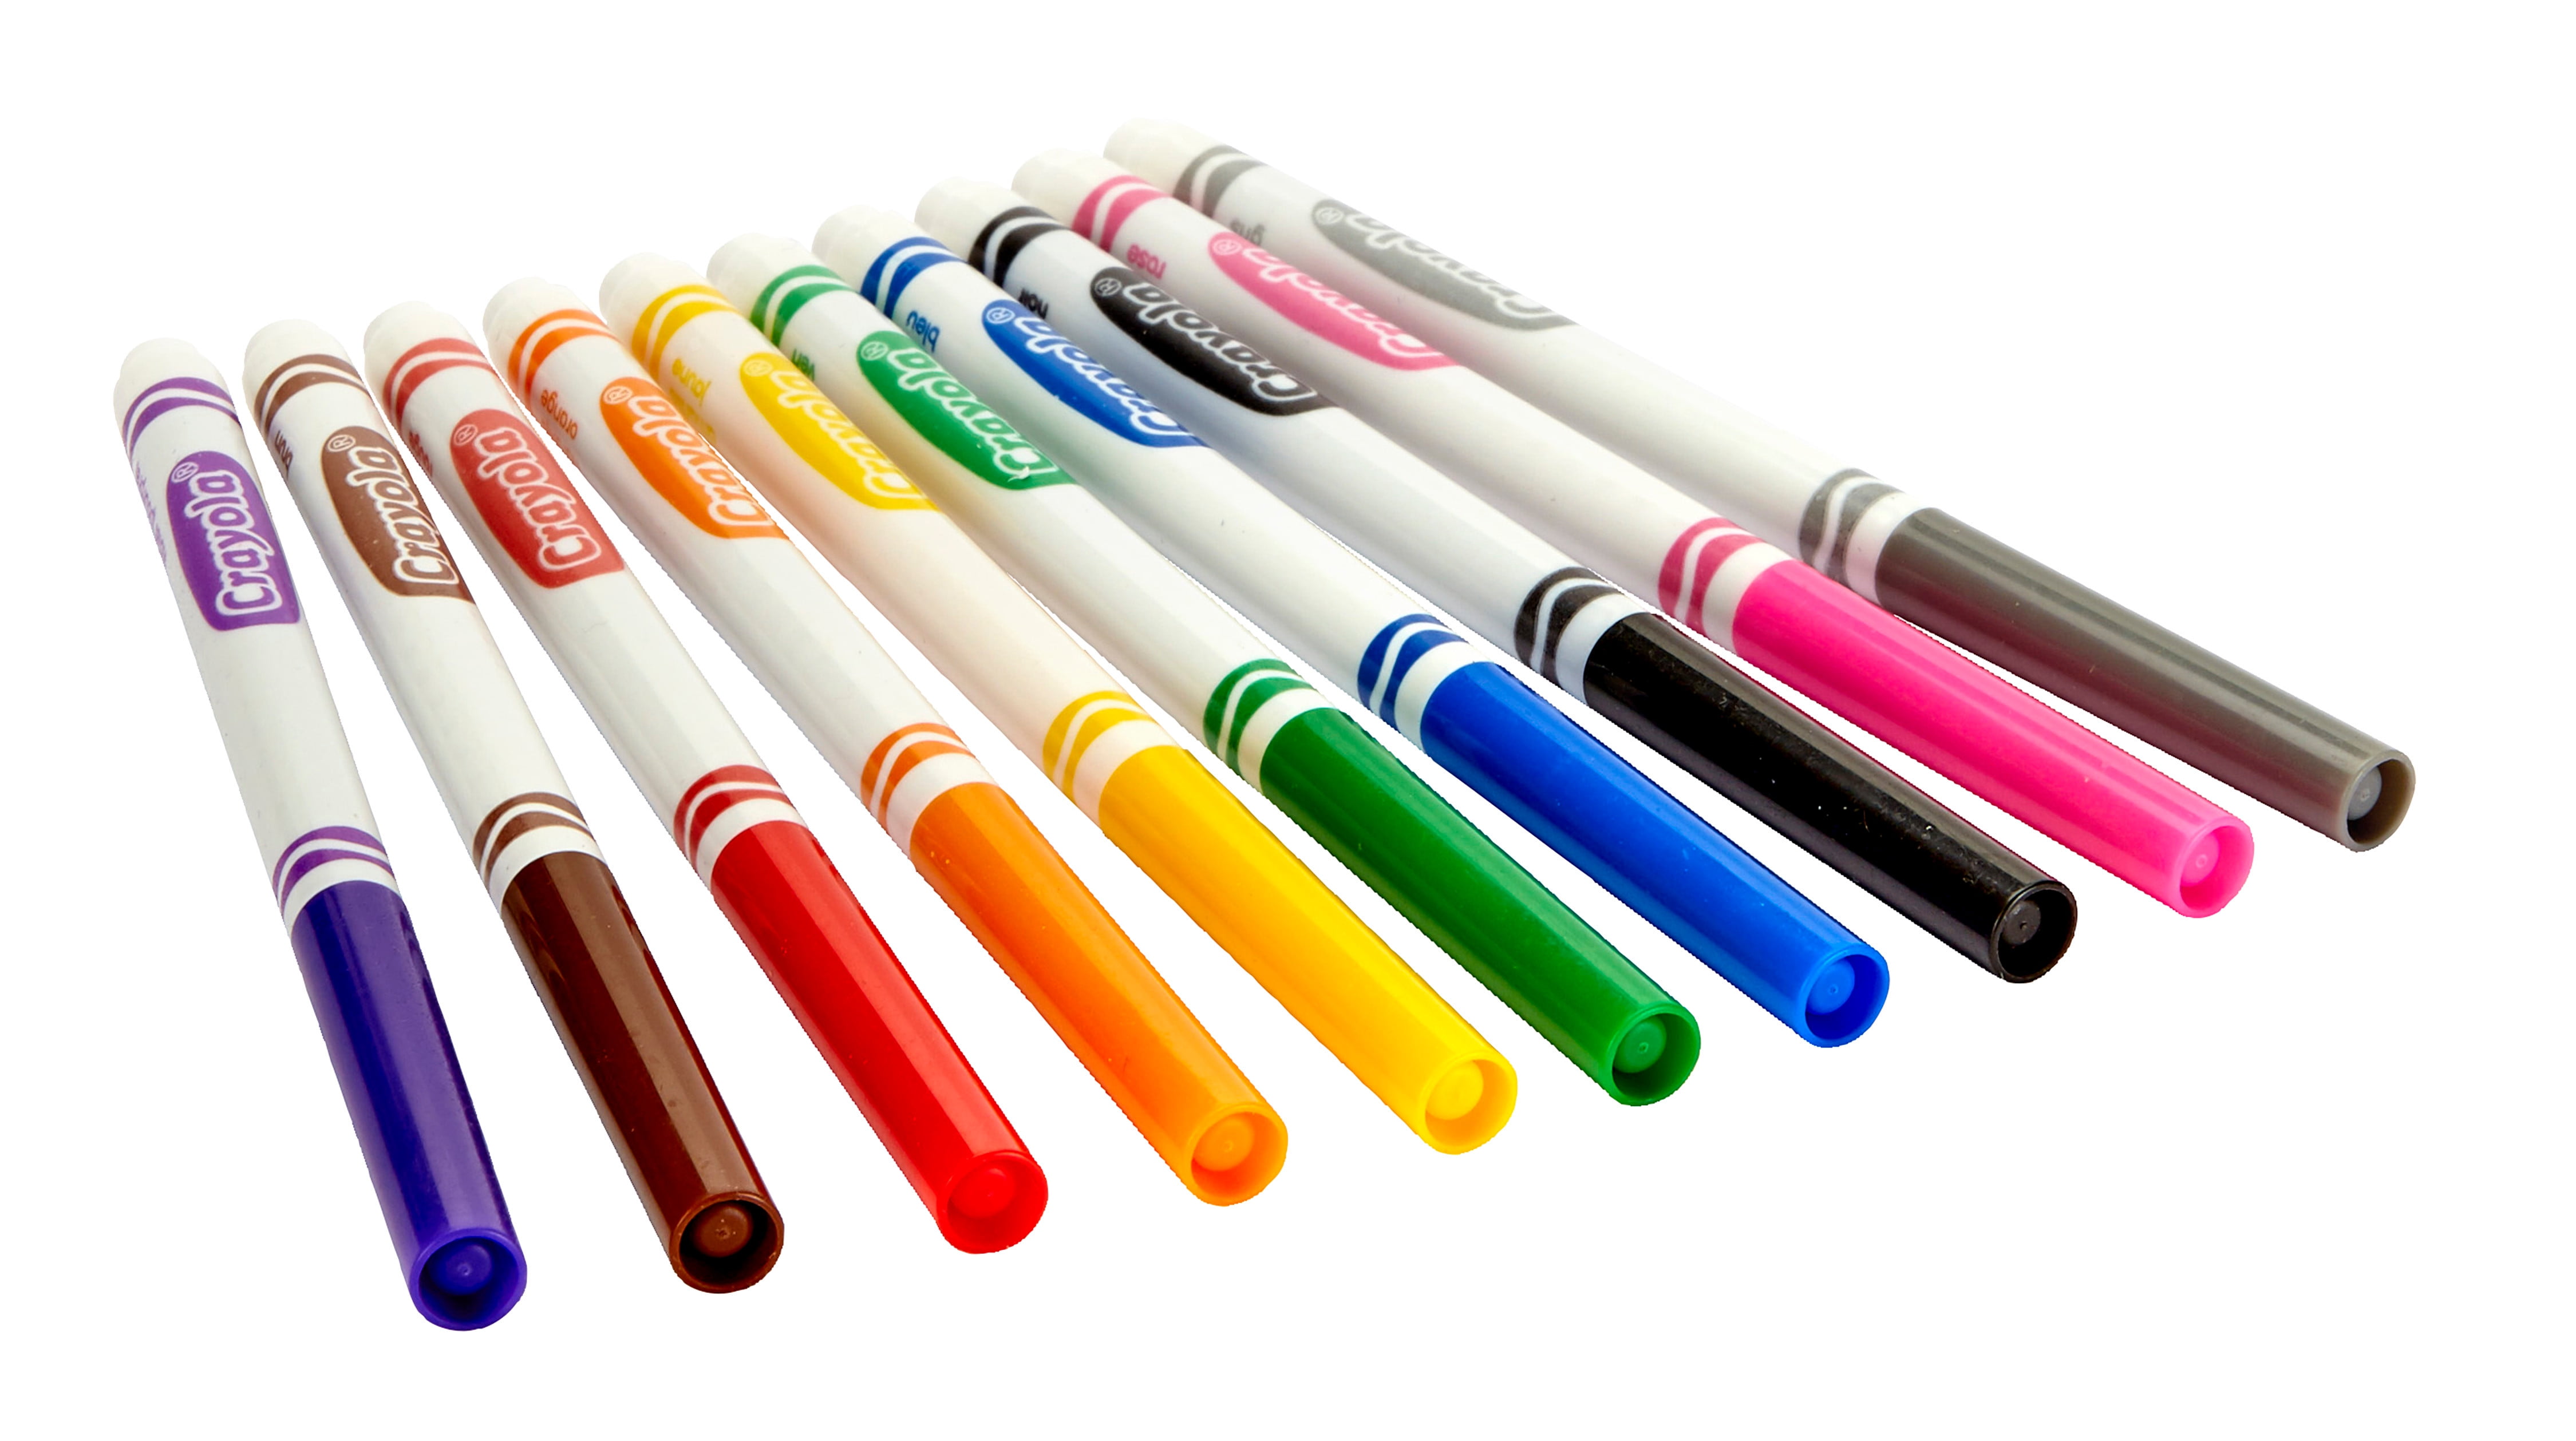 Crayola® Fine Line Fabric Markers Classpack® - Set of 80